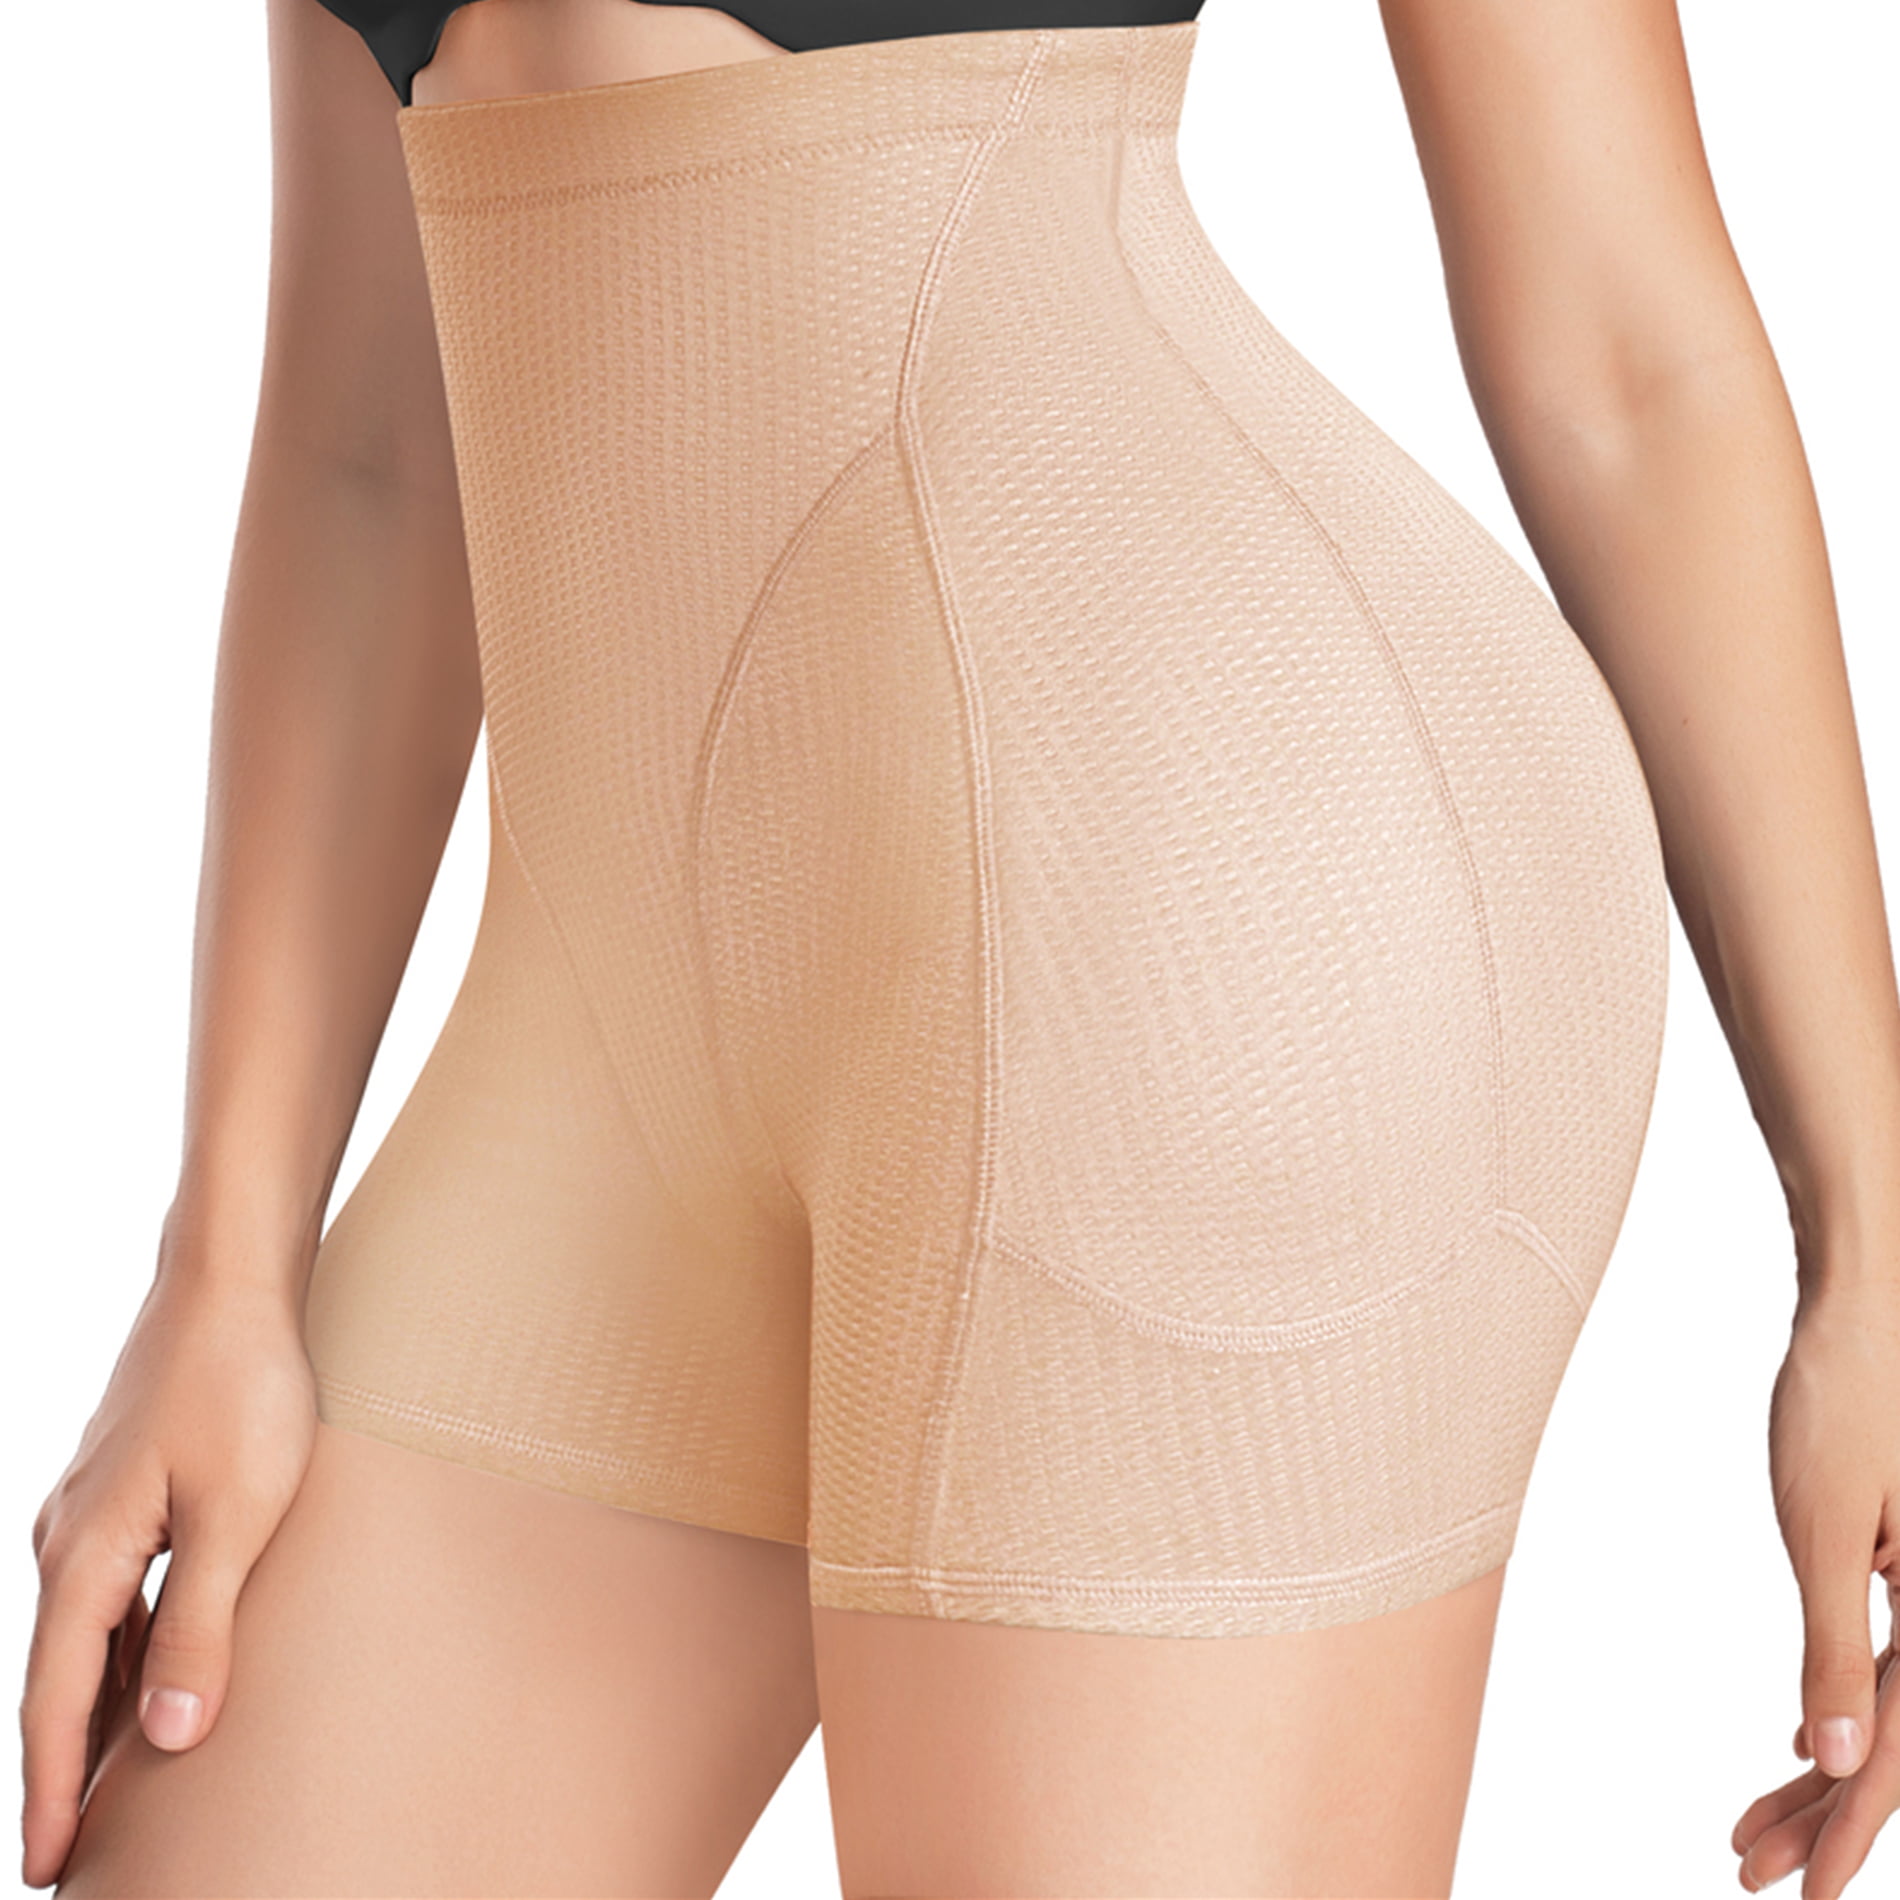 YIANNA Padded Butt Lifter Shapewear Panty Hip Enhancer Control Underwear Shaper 